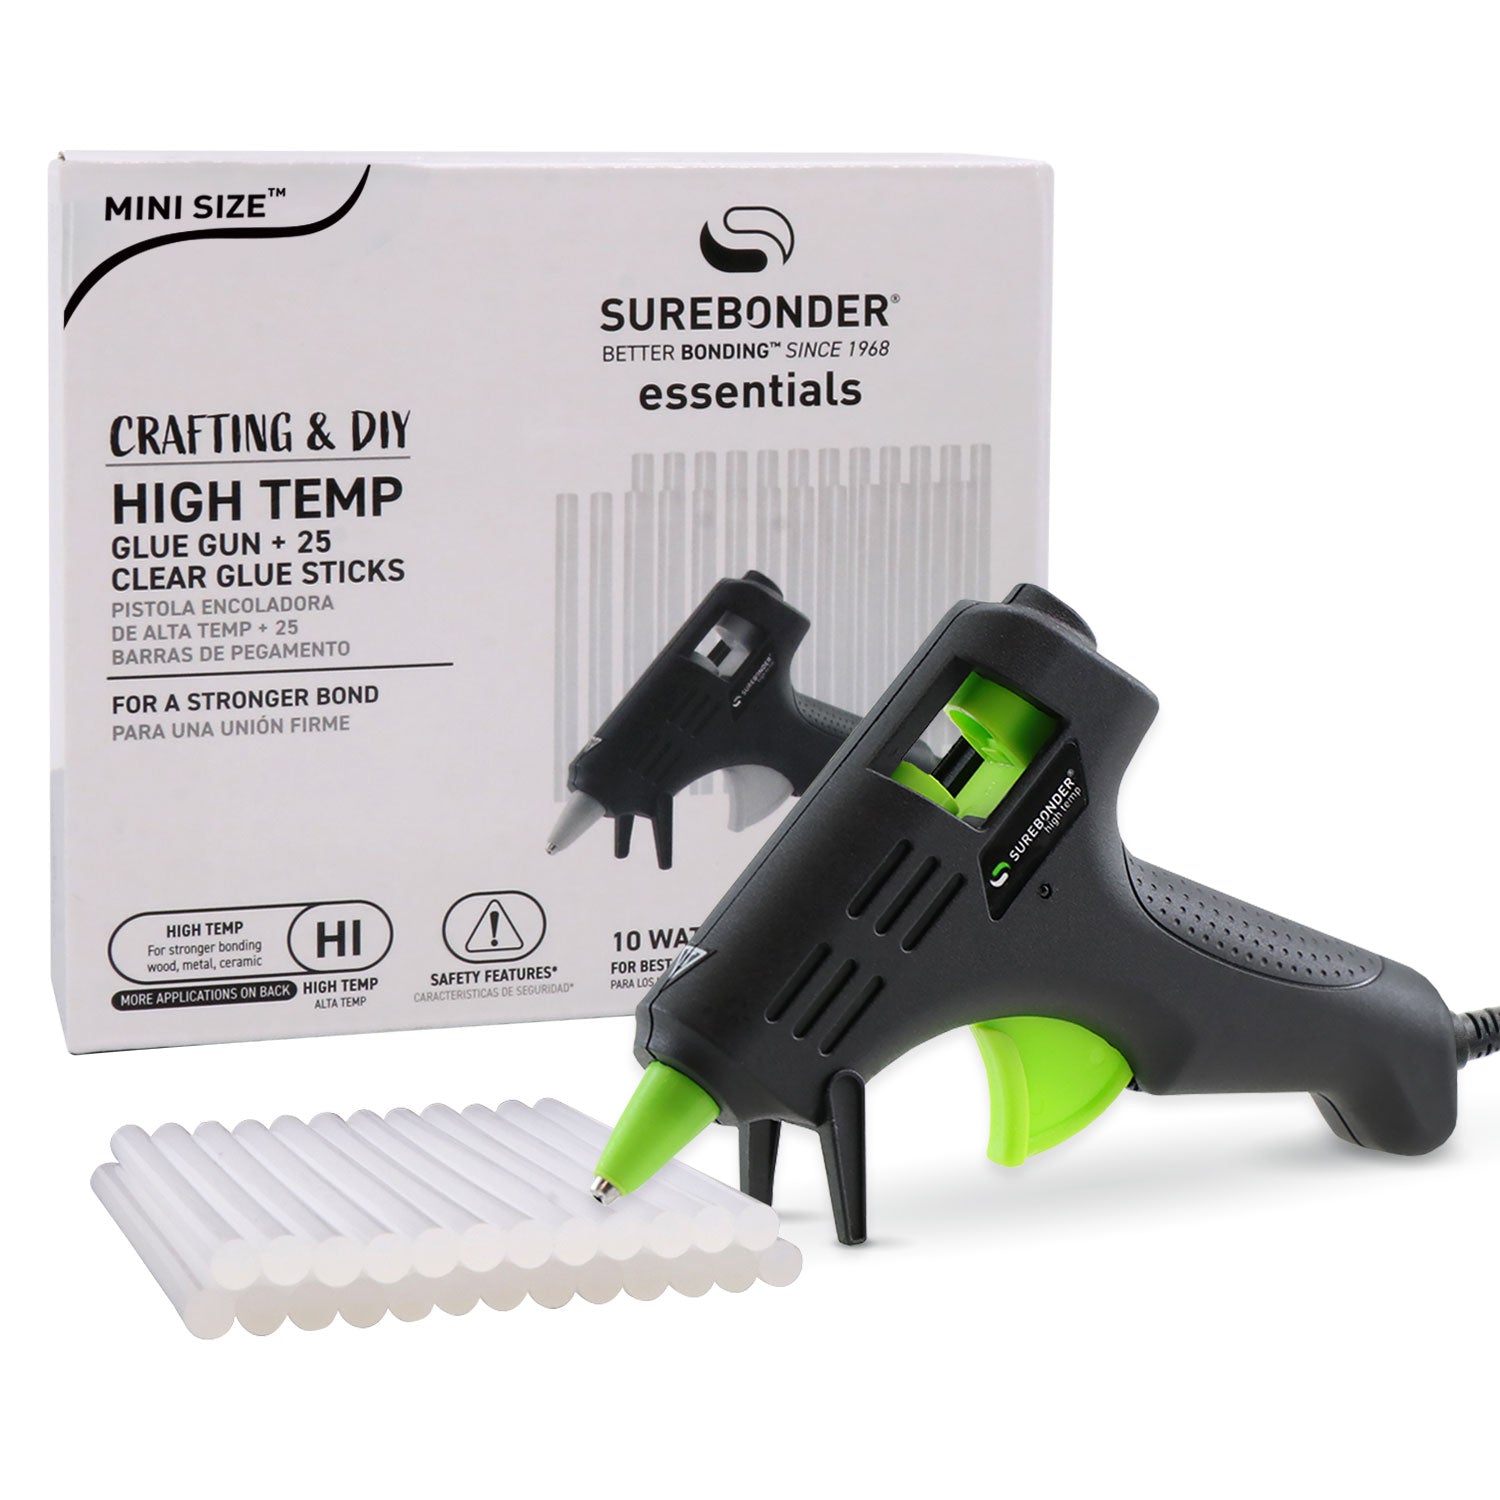 Surebonder Specialty Mini High Temp Glue Gun